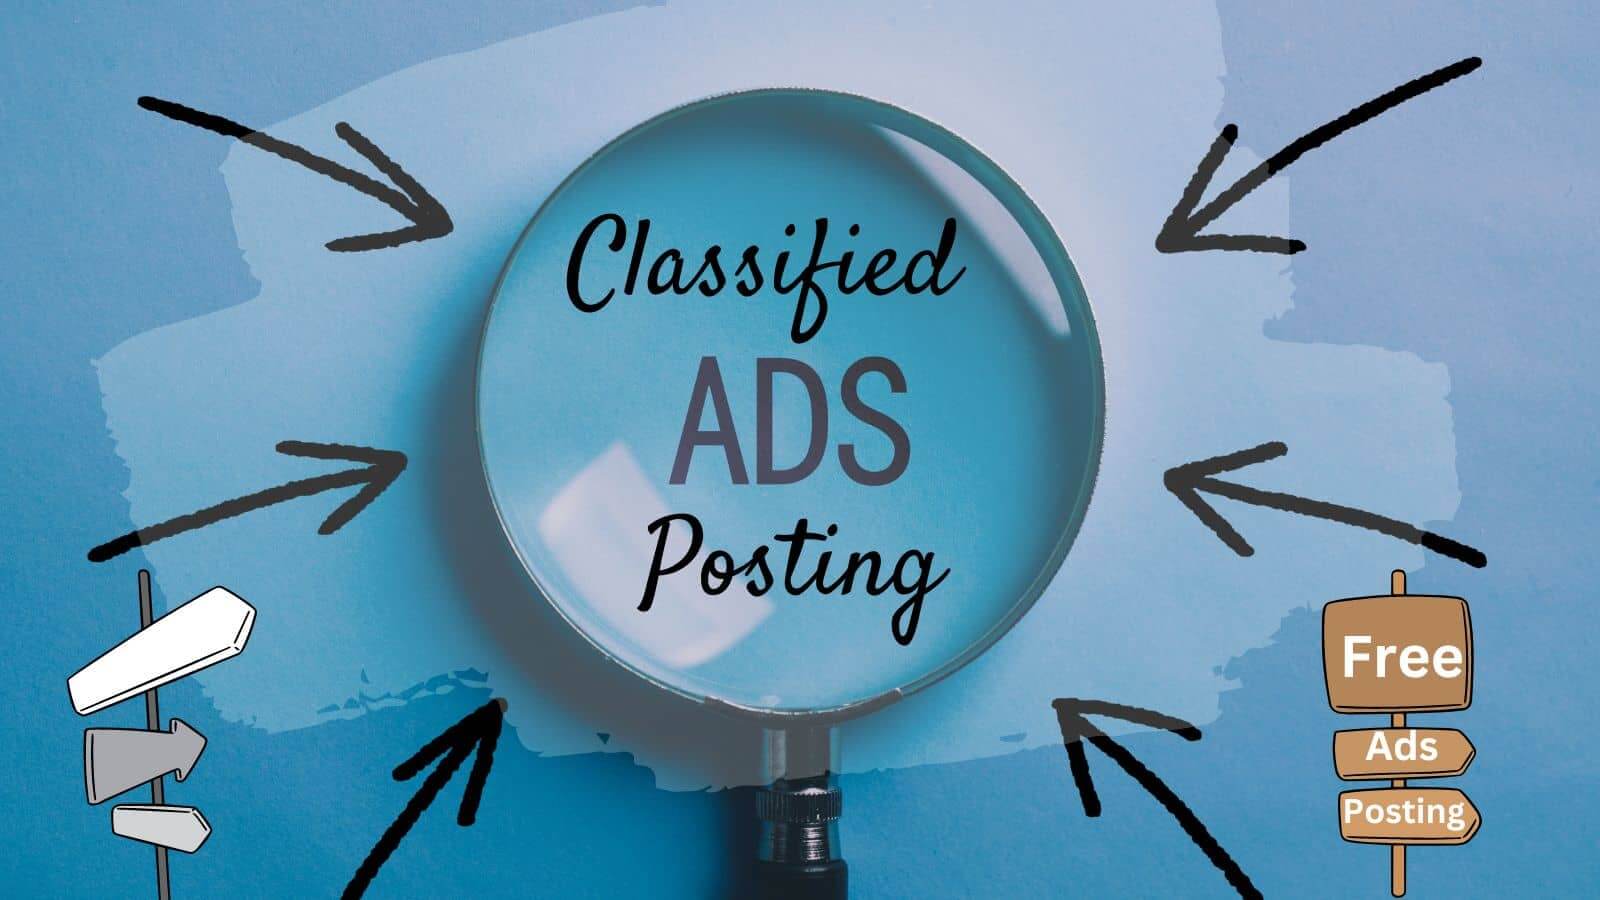 Make Use of Free Classified Ads